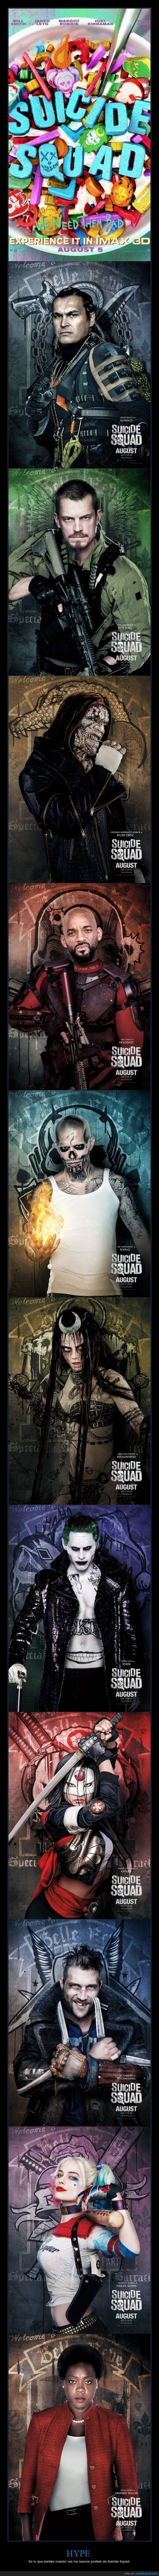 cine,película,suicide squad,posters